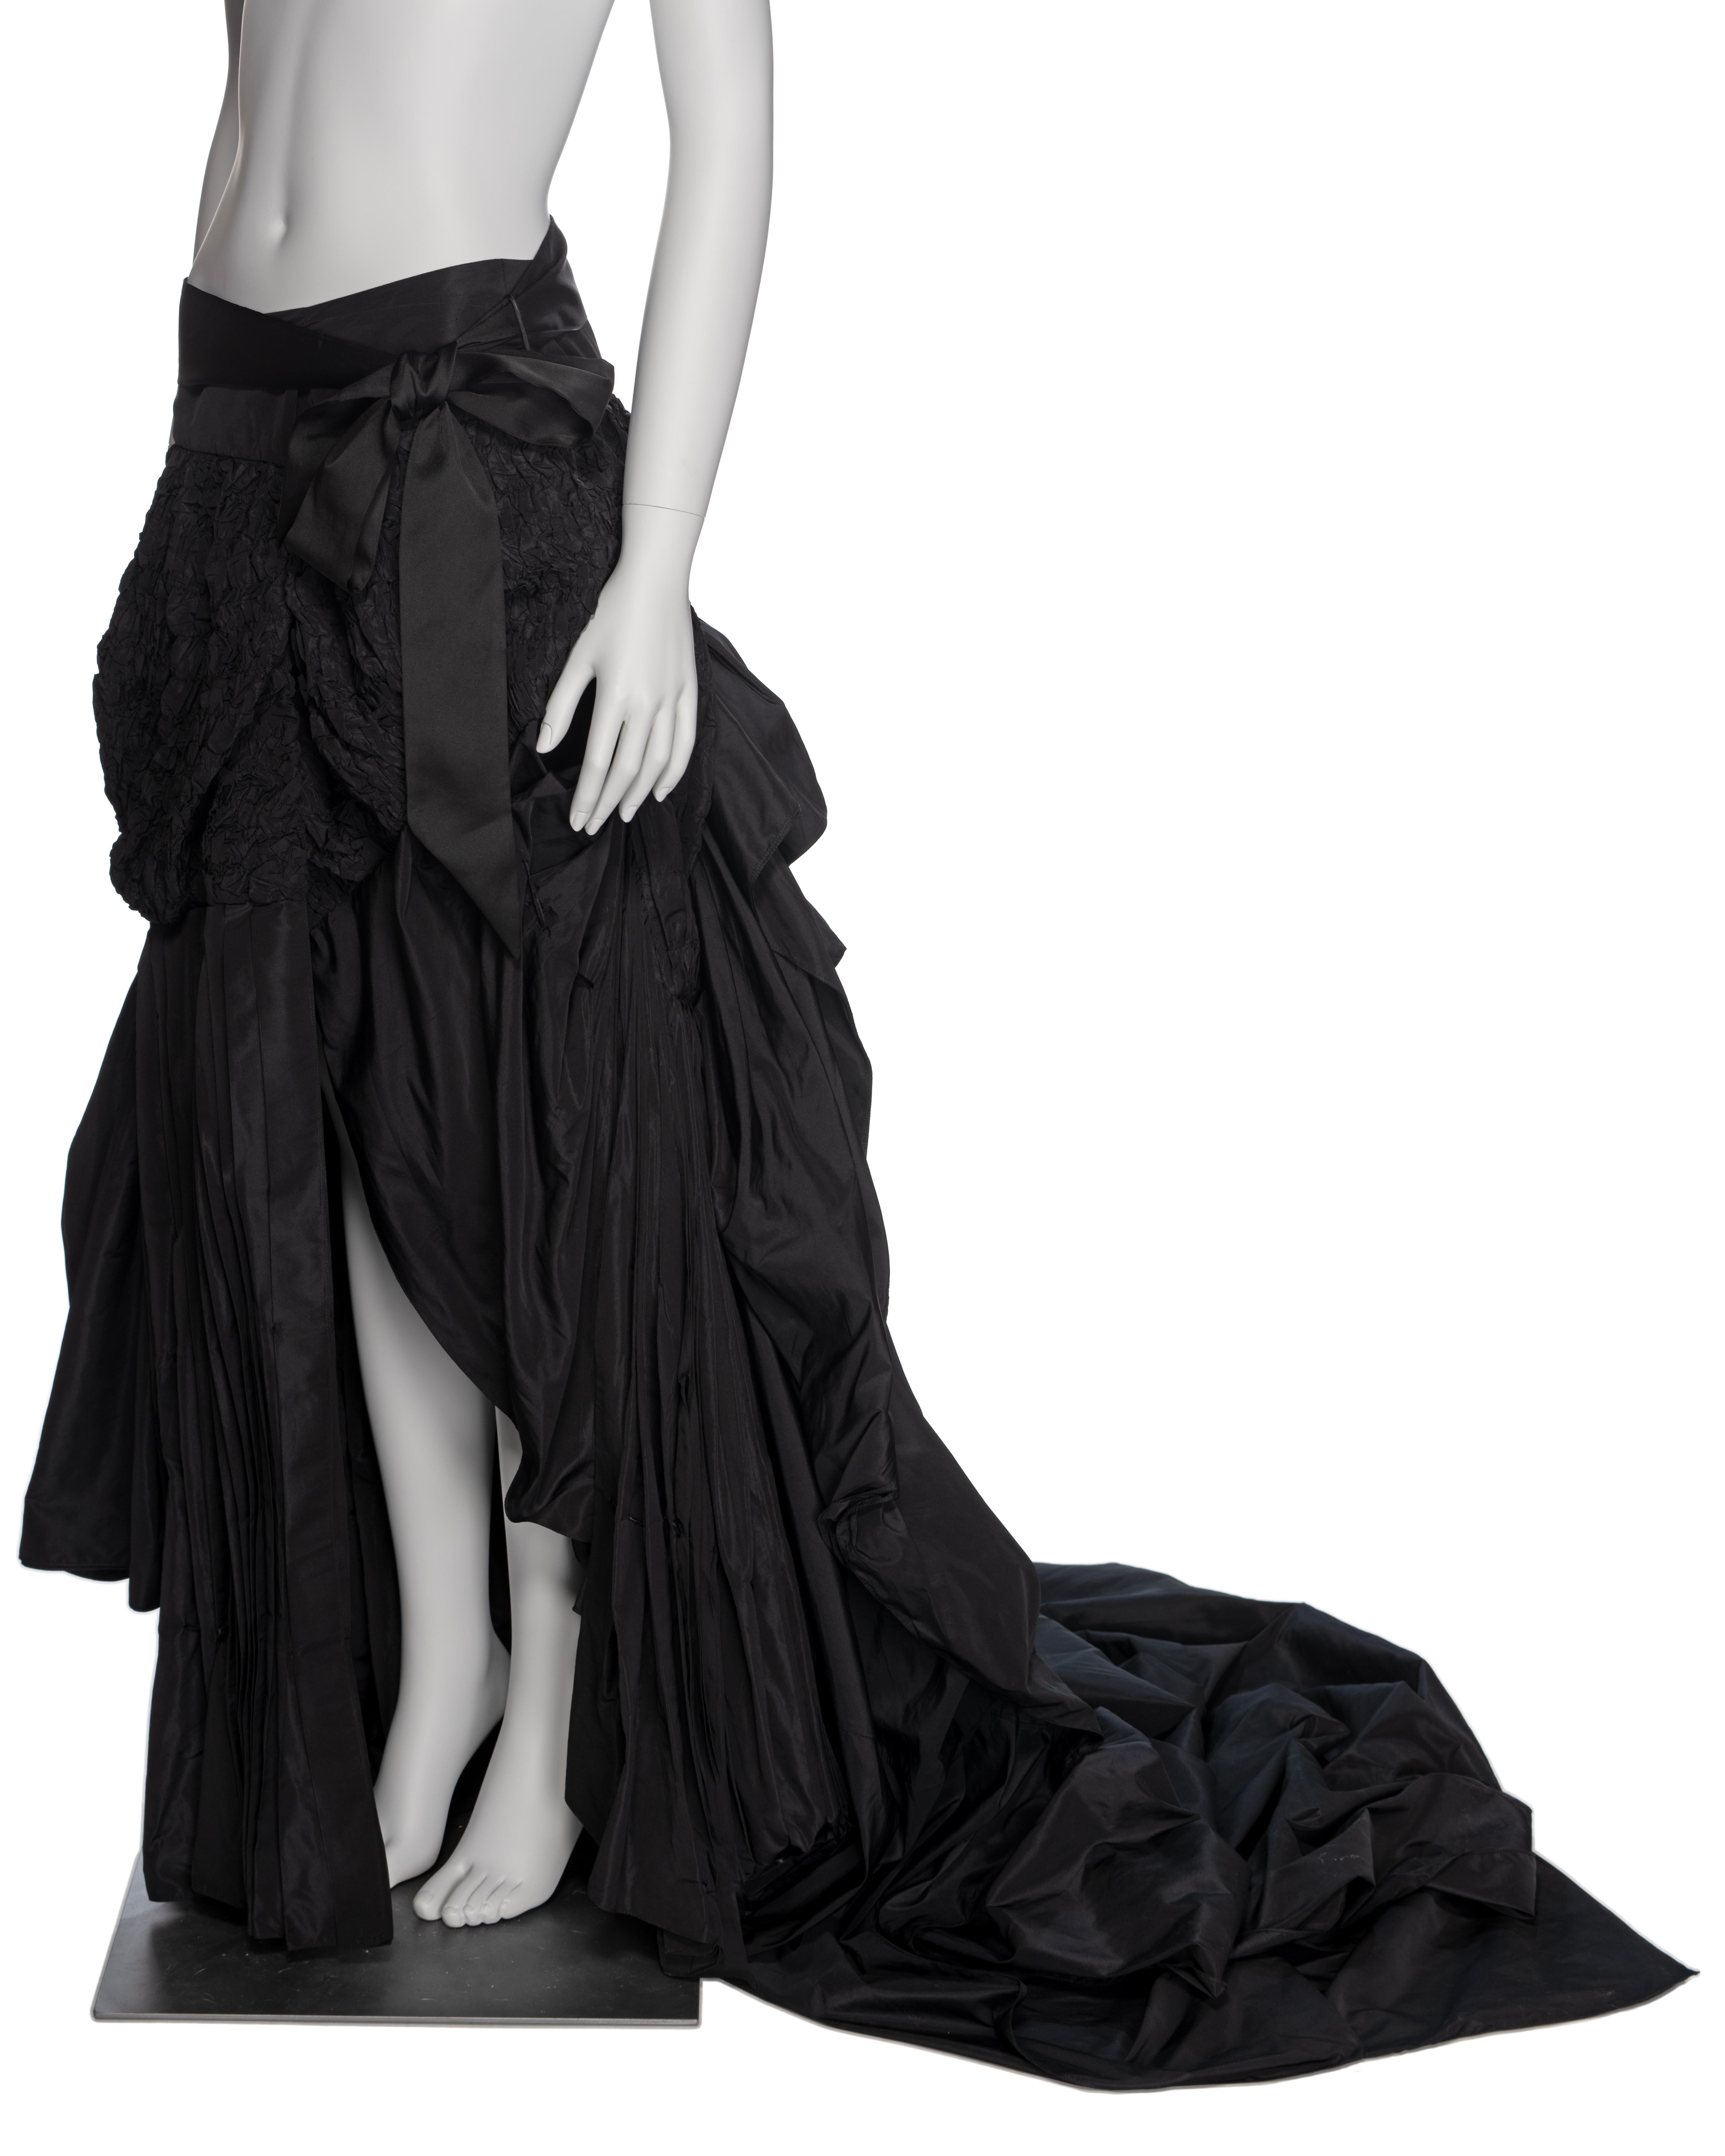 Yves Saint Laurent by Tom Ford Black Silk Taffeta Trained Evening Skirt, FW 2001 For Sale 3